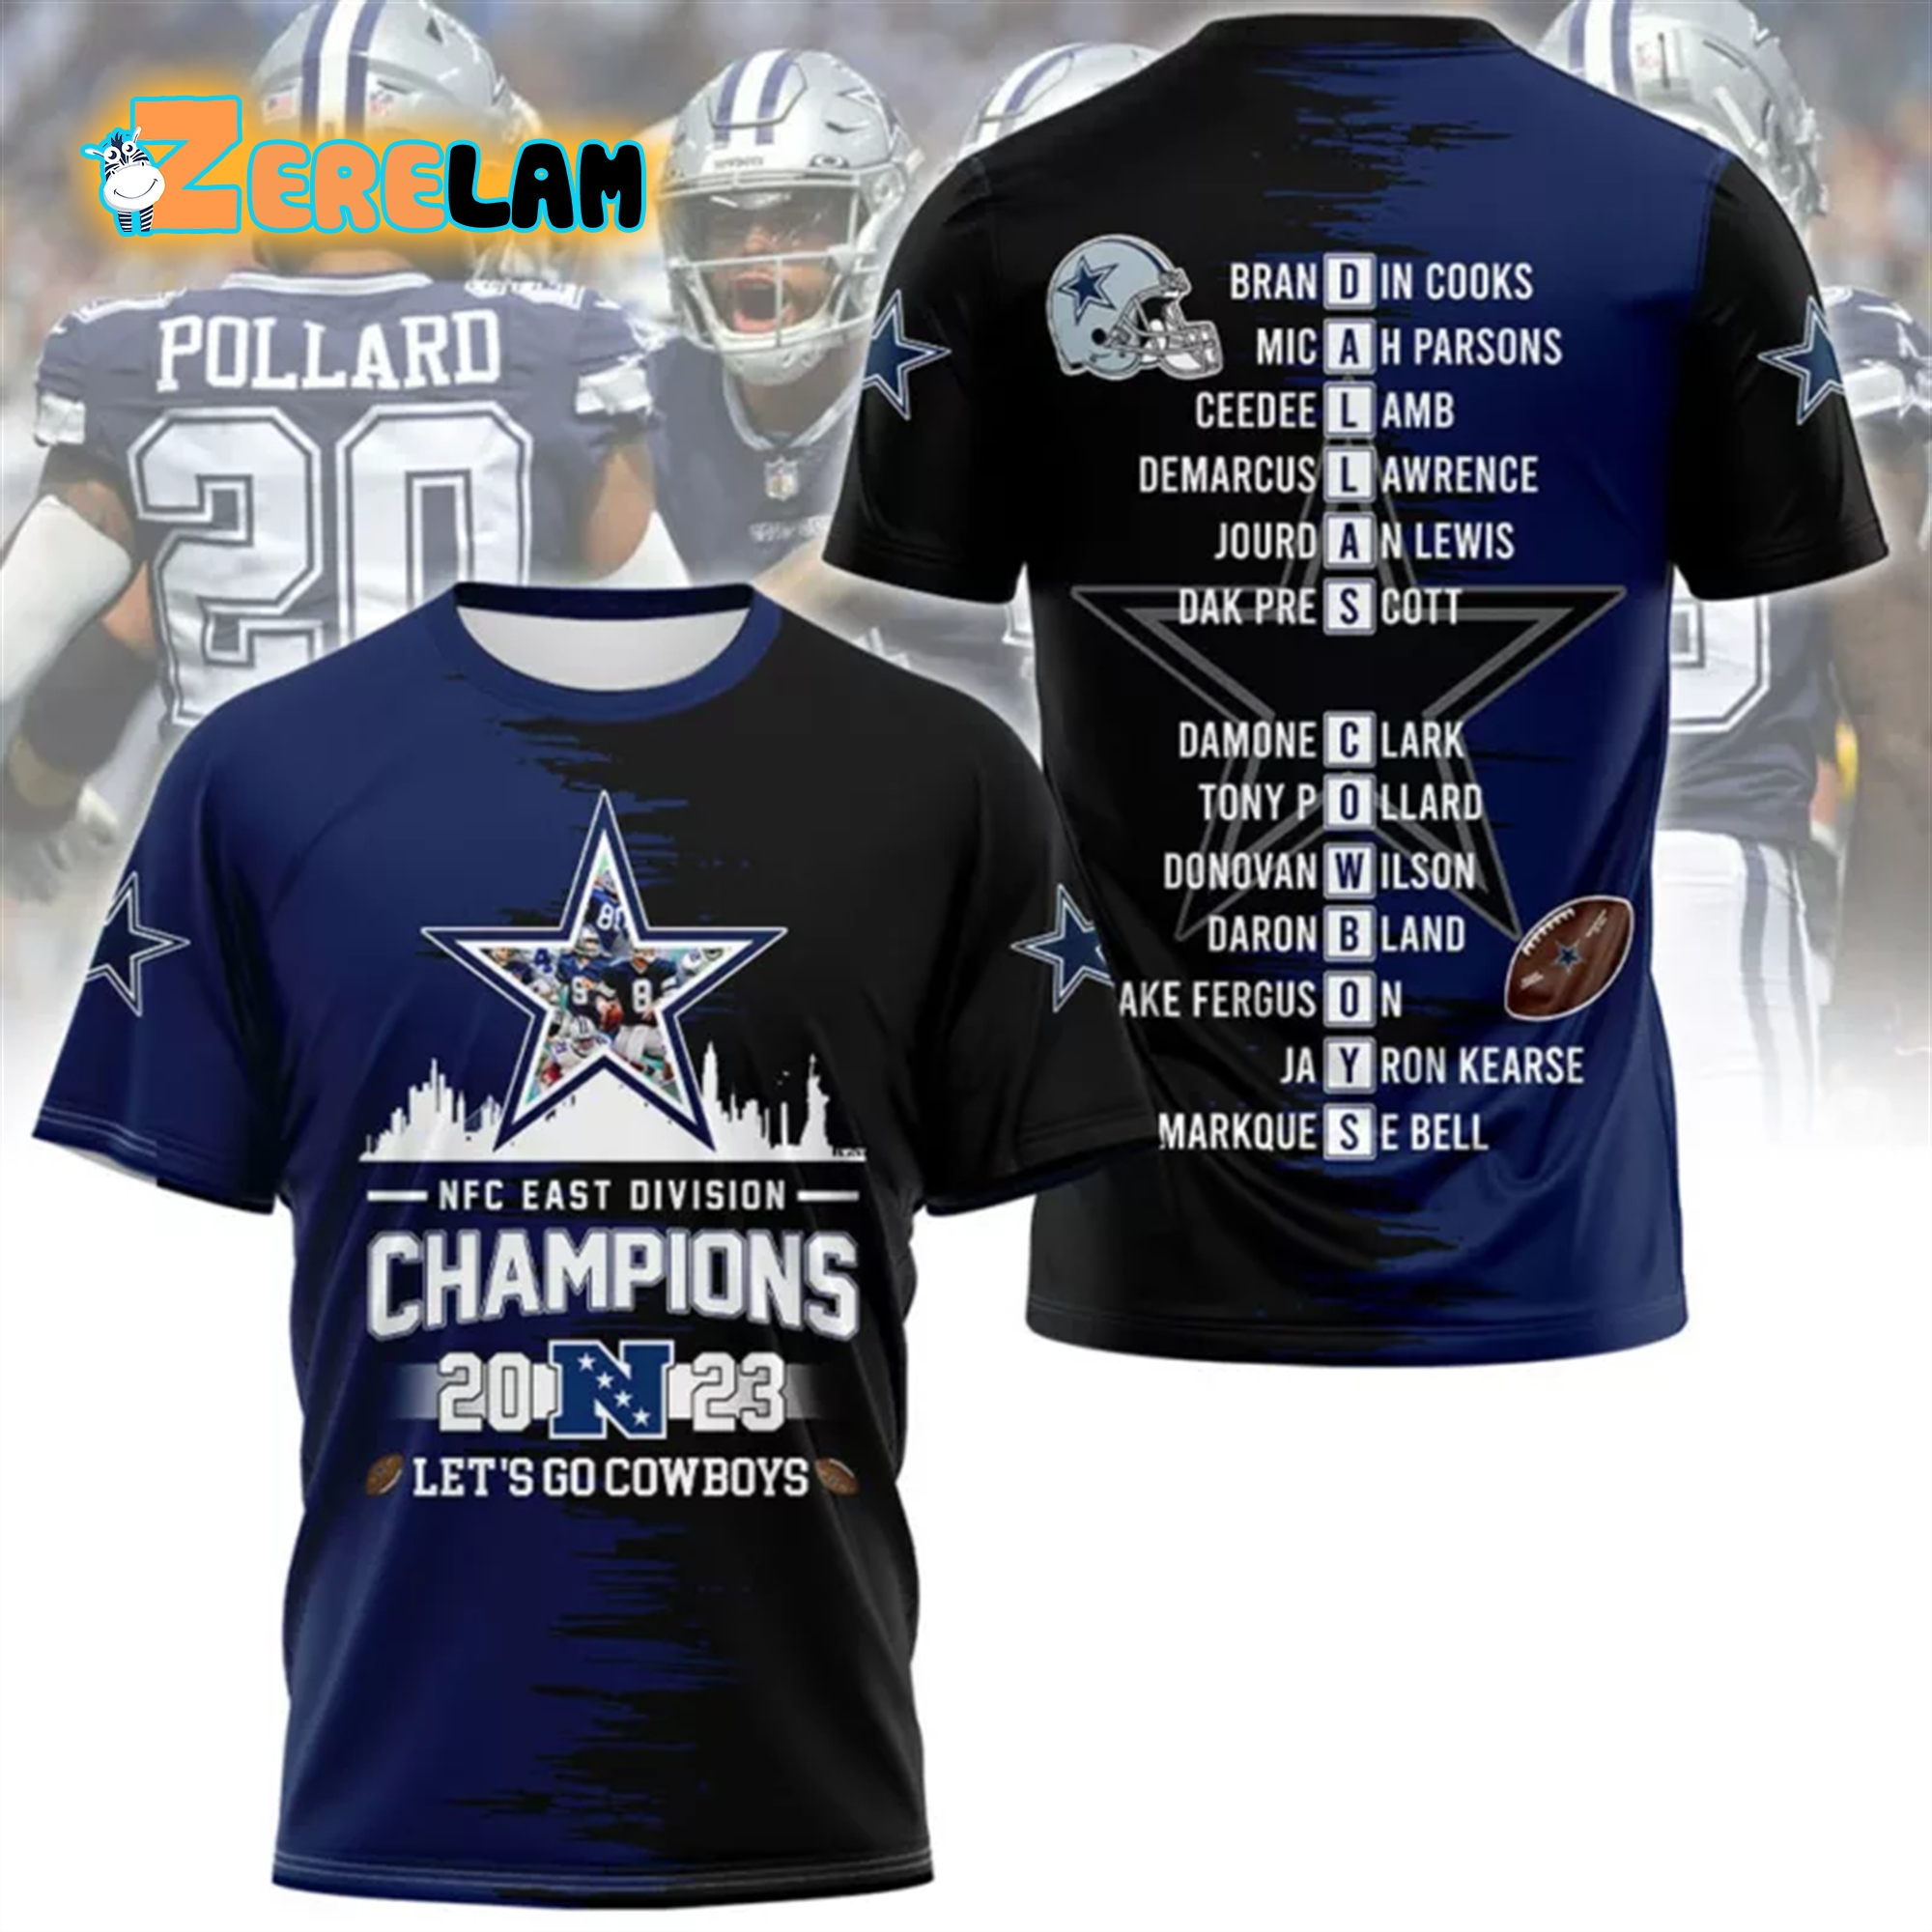 NFC East Division Champions 2023 Let's Go Cowboys Shirt - Zerelam